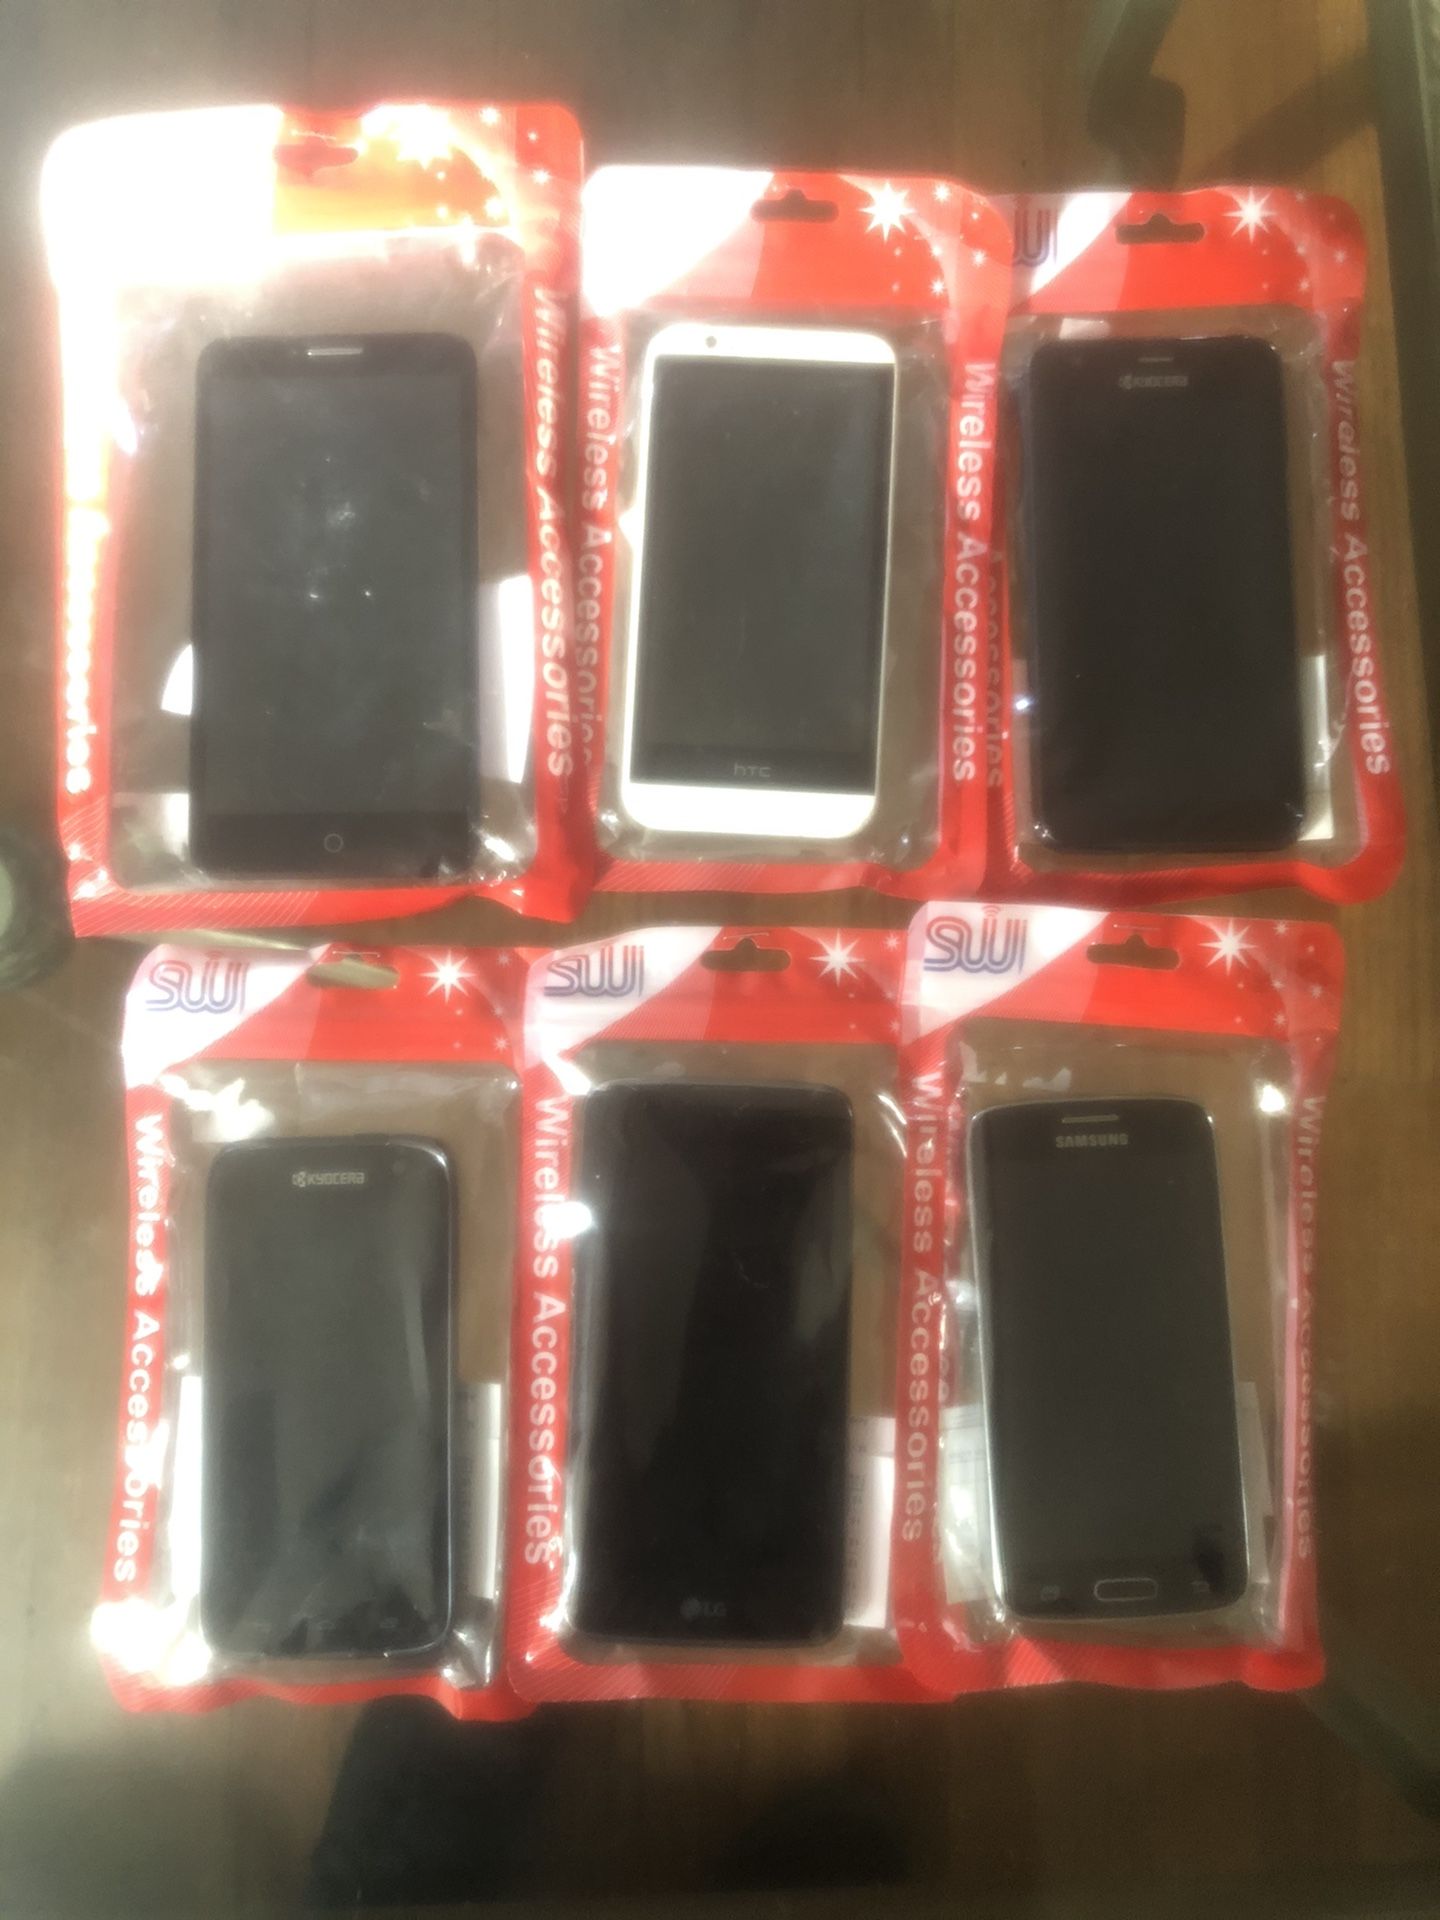 Lot of 6 smartphones - metro T-Mobile unlocked Verizon